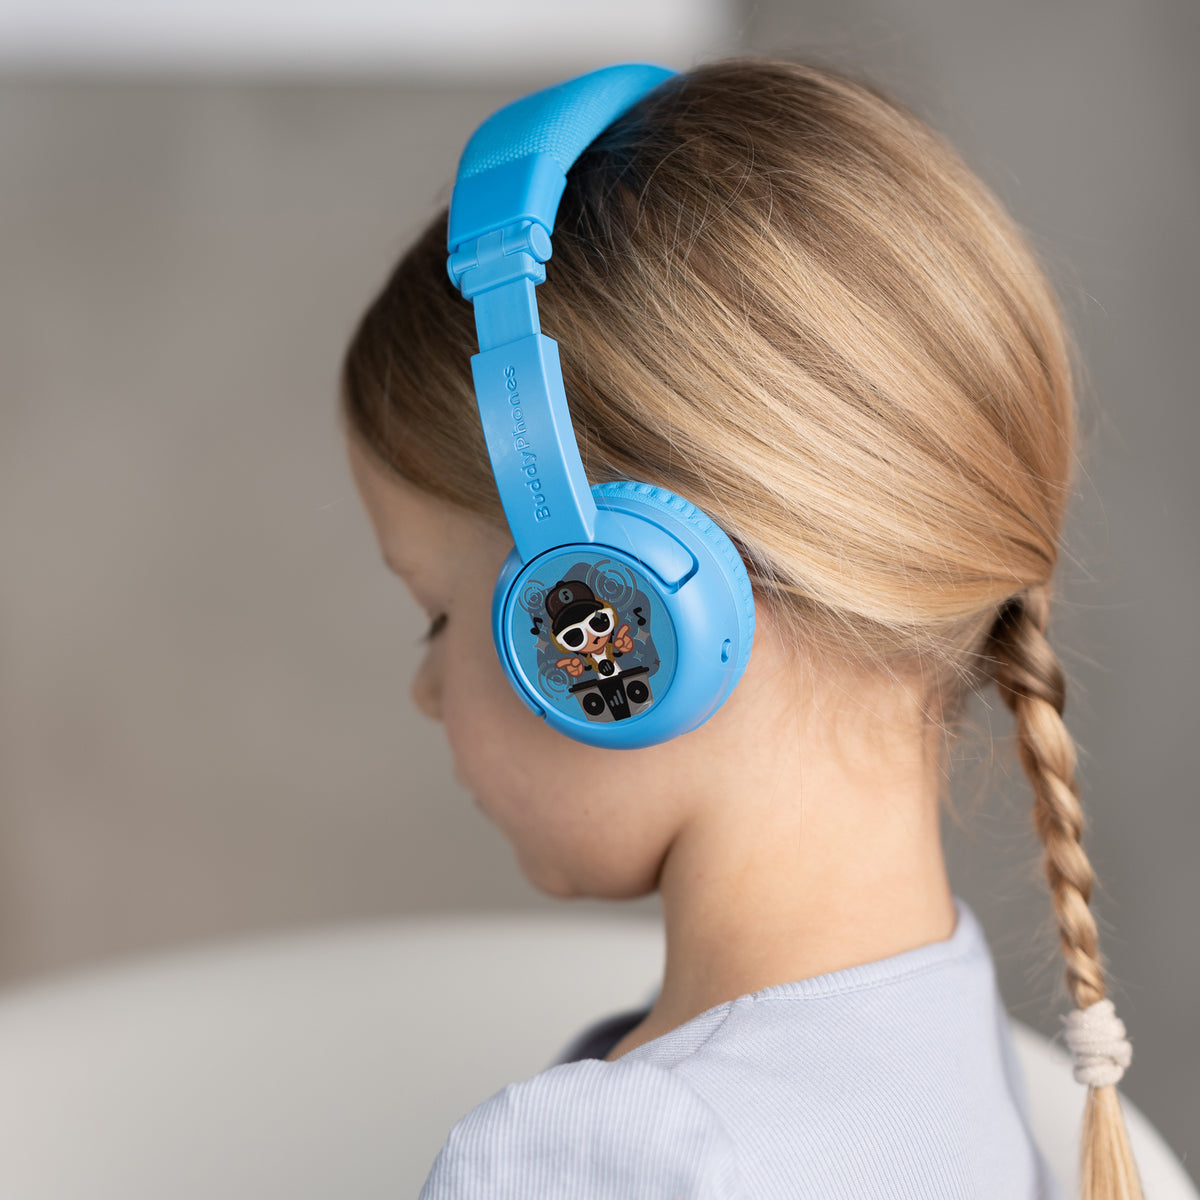 BUDDYPHONES PLAY Plus Wireless Bluetooth Headphones for Kids - Cool Blue